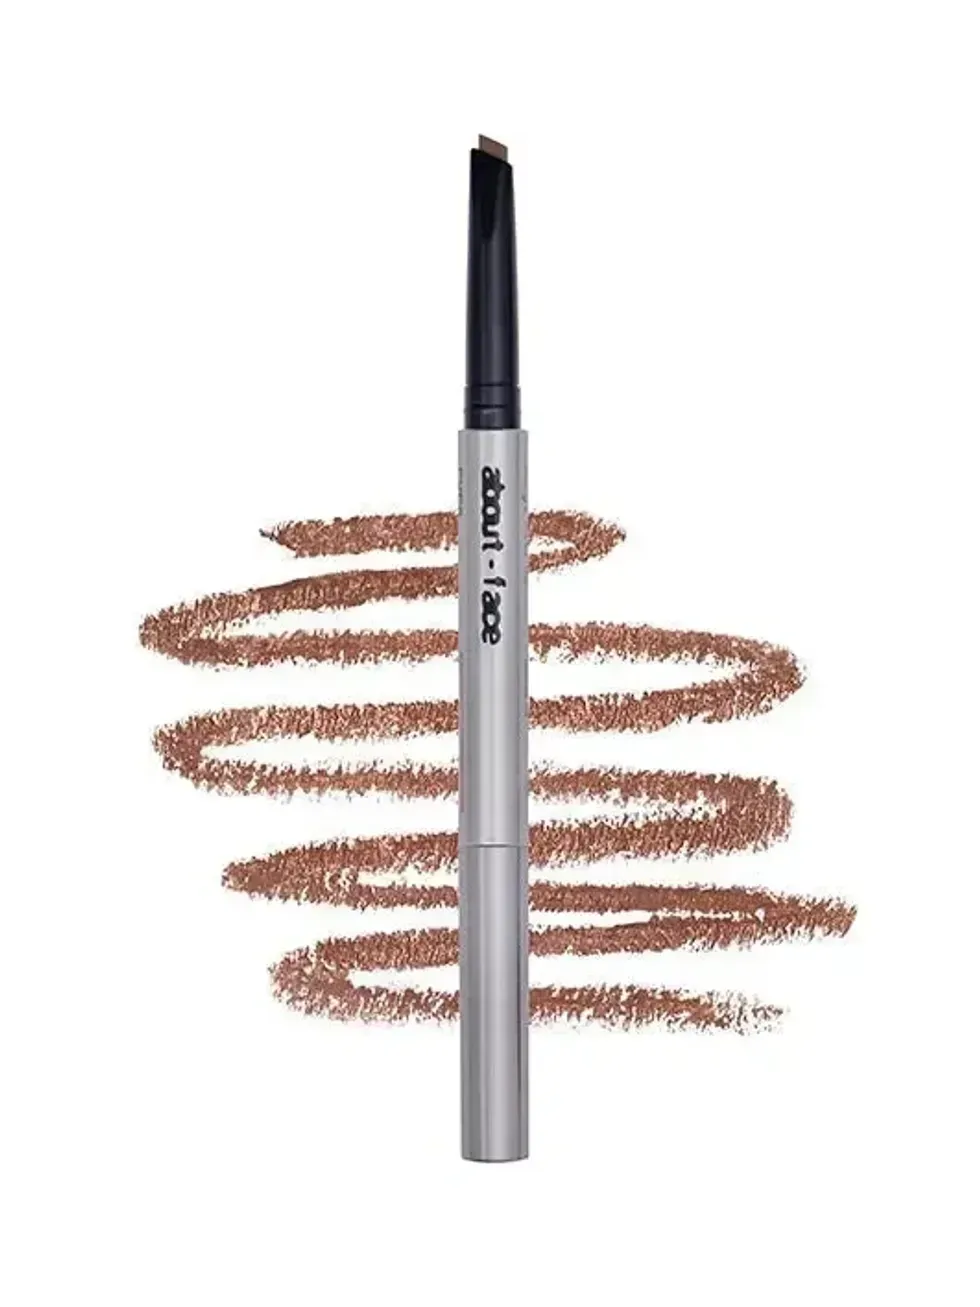 About Face Beauty Brow Artist Longwear Eyebrow Pencil \u2014 Auburn